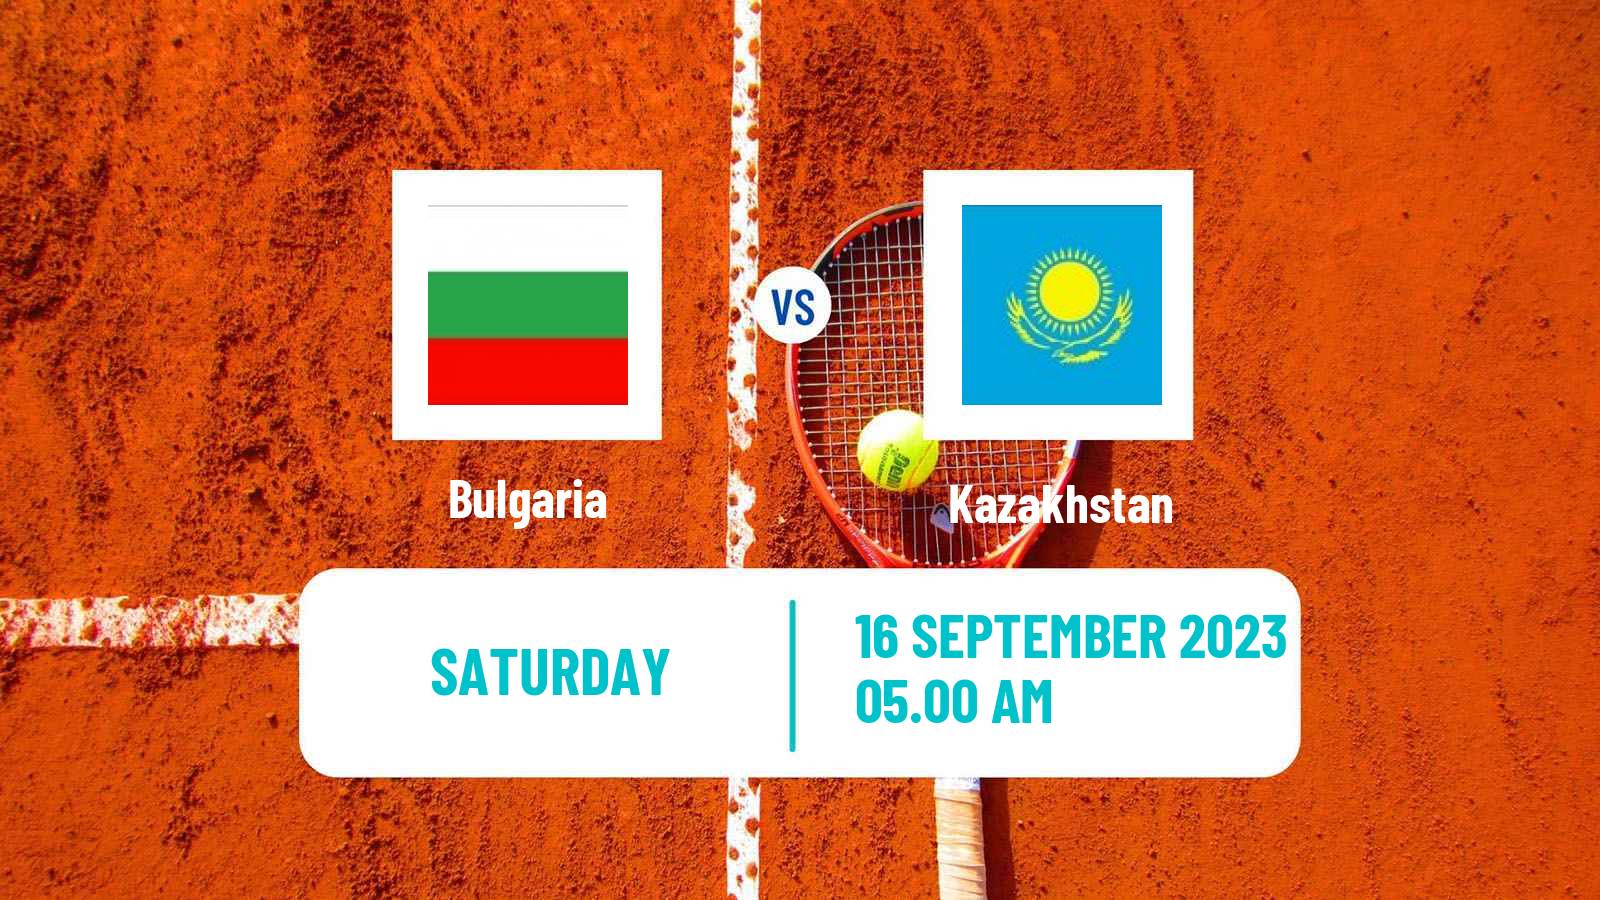 Tennis Davis Cup World Group I Teams Bulgaria - Kazakhstan